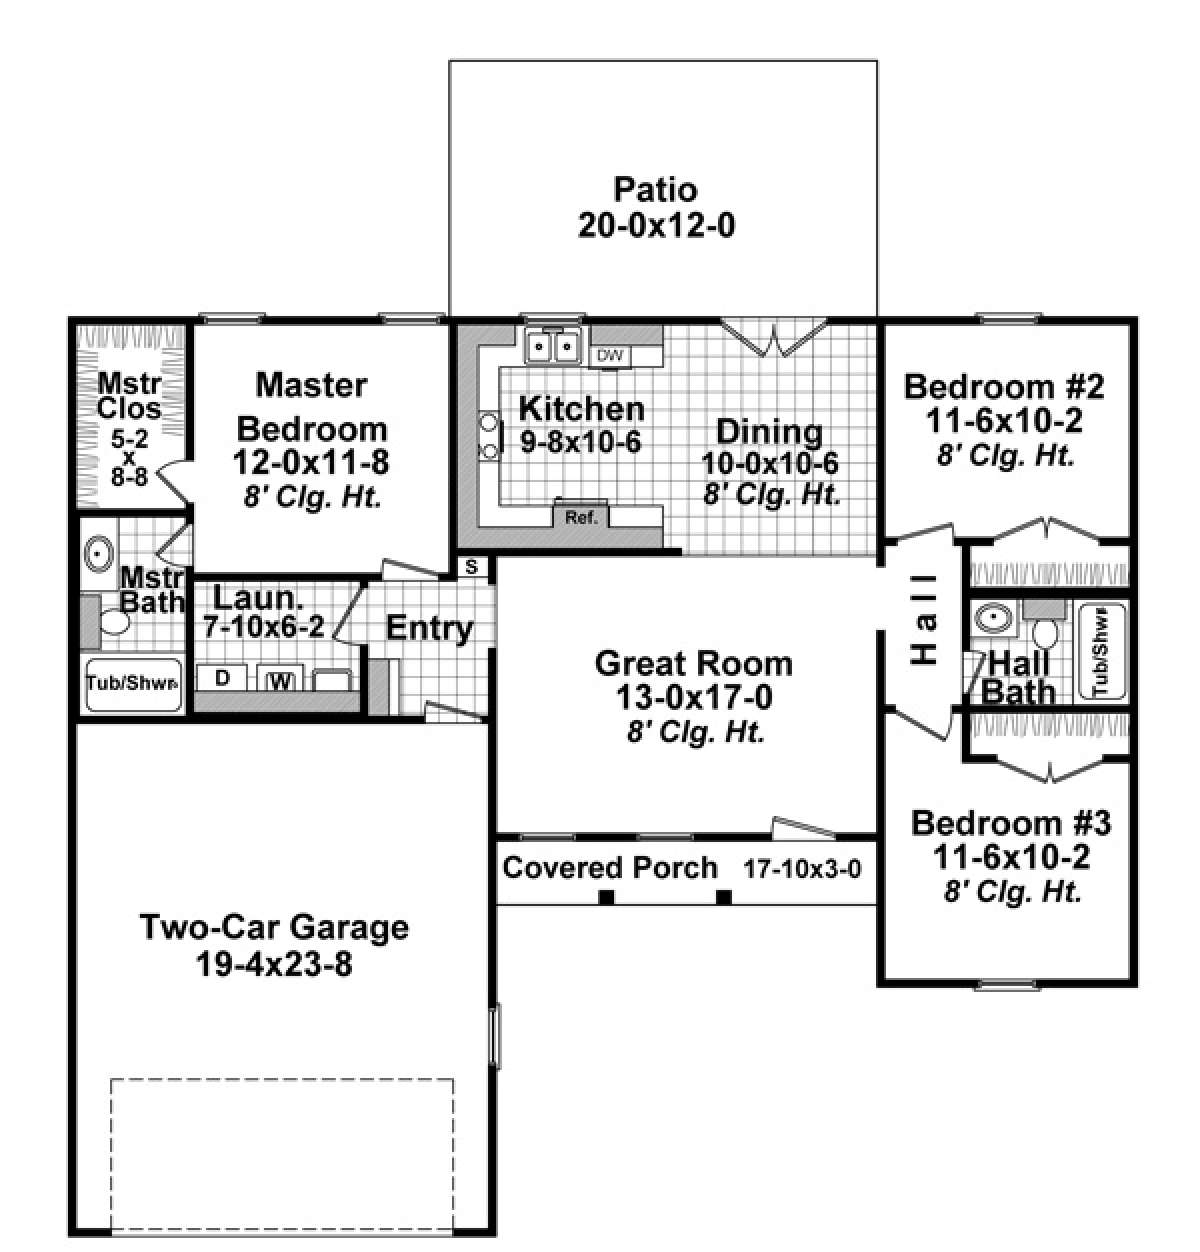 Floor plan for Ranch Plan: 1,200 Square Feet, 3 Bedrooms, 2 Bathrooms